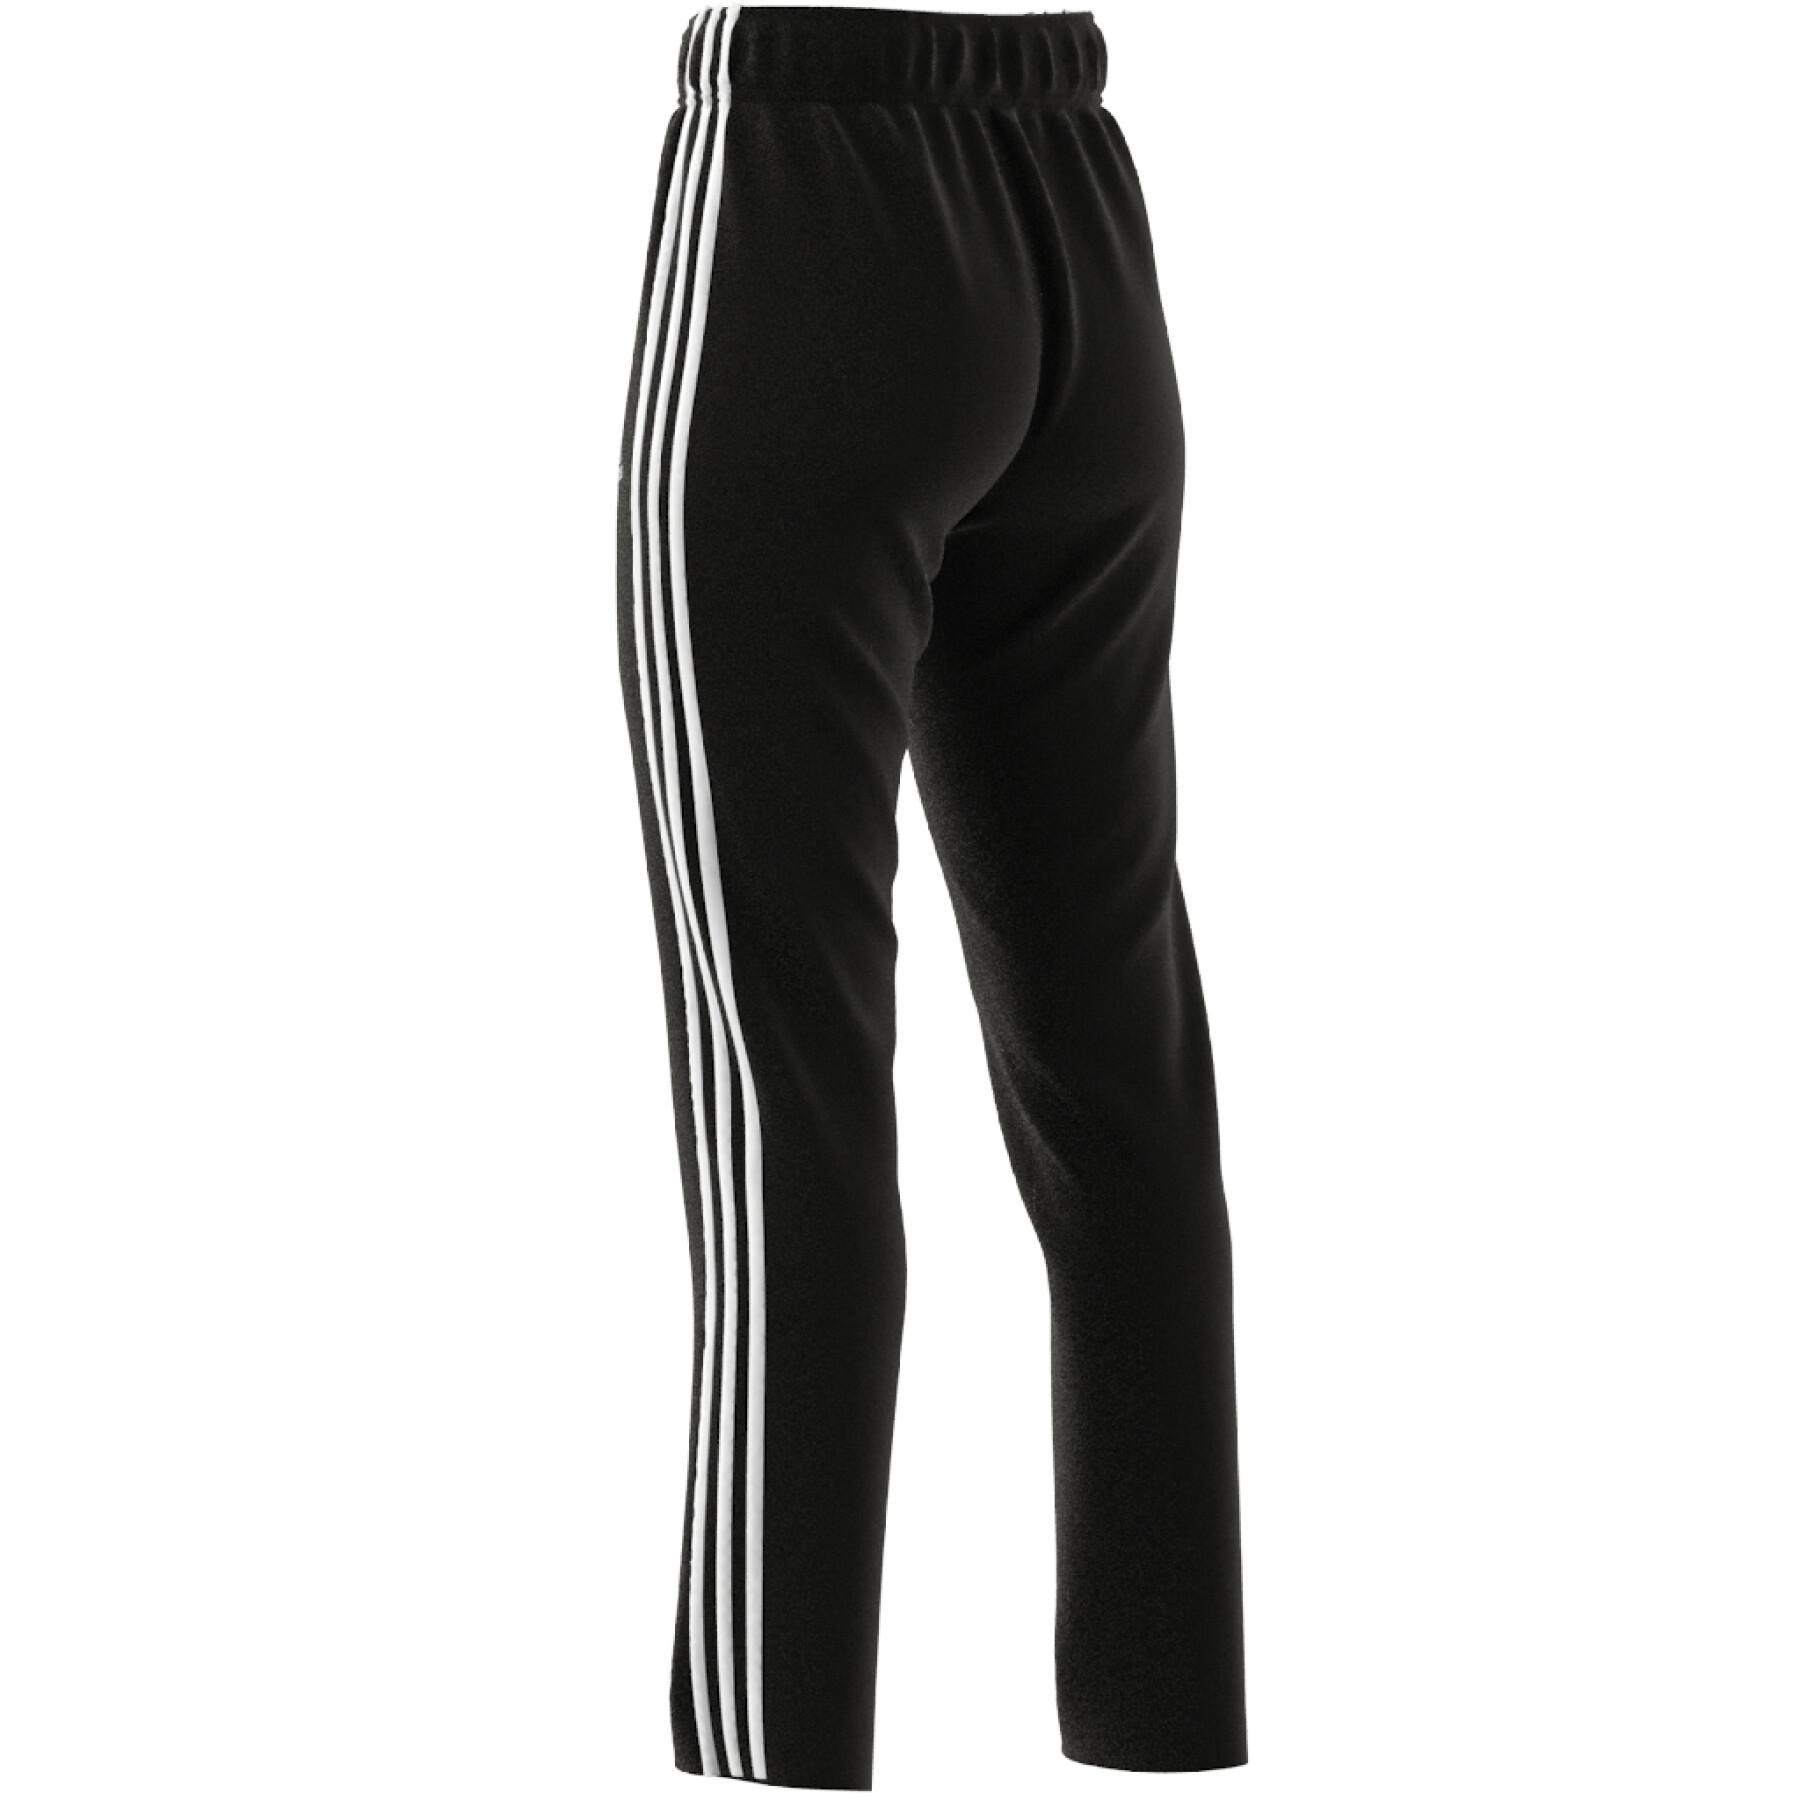 Women's jogging suit adidas 3-Stripes Essentials Warm-Up